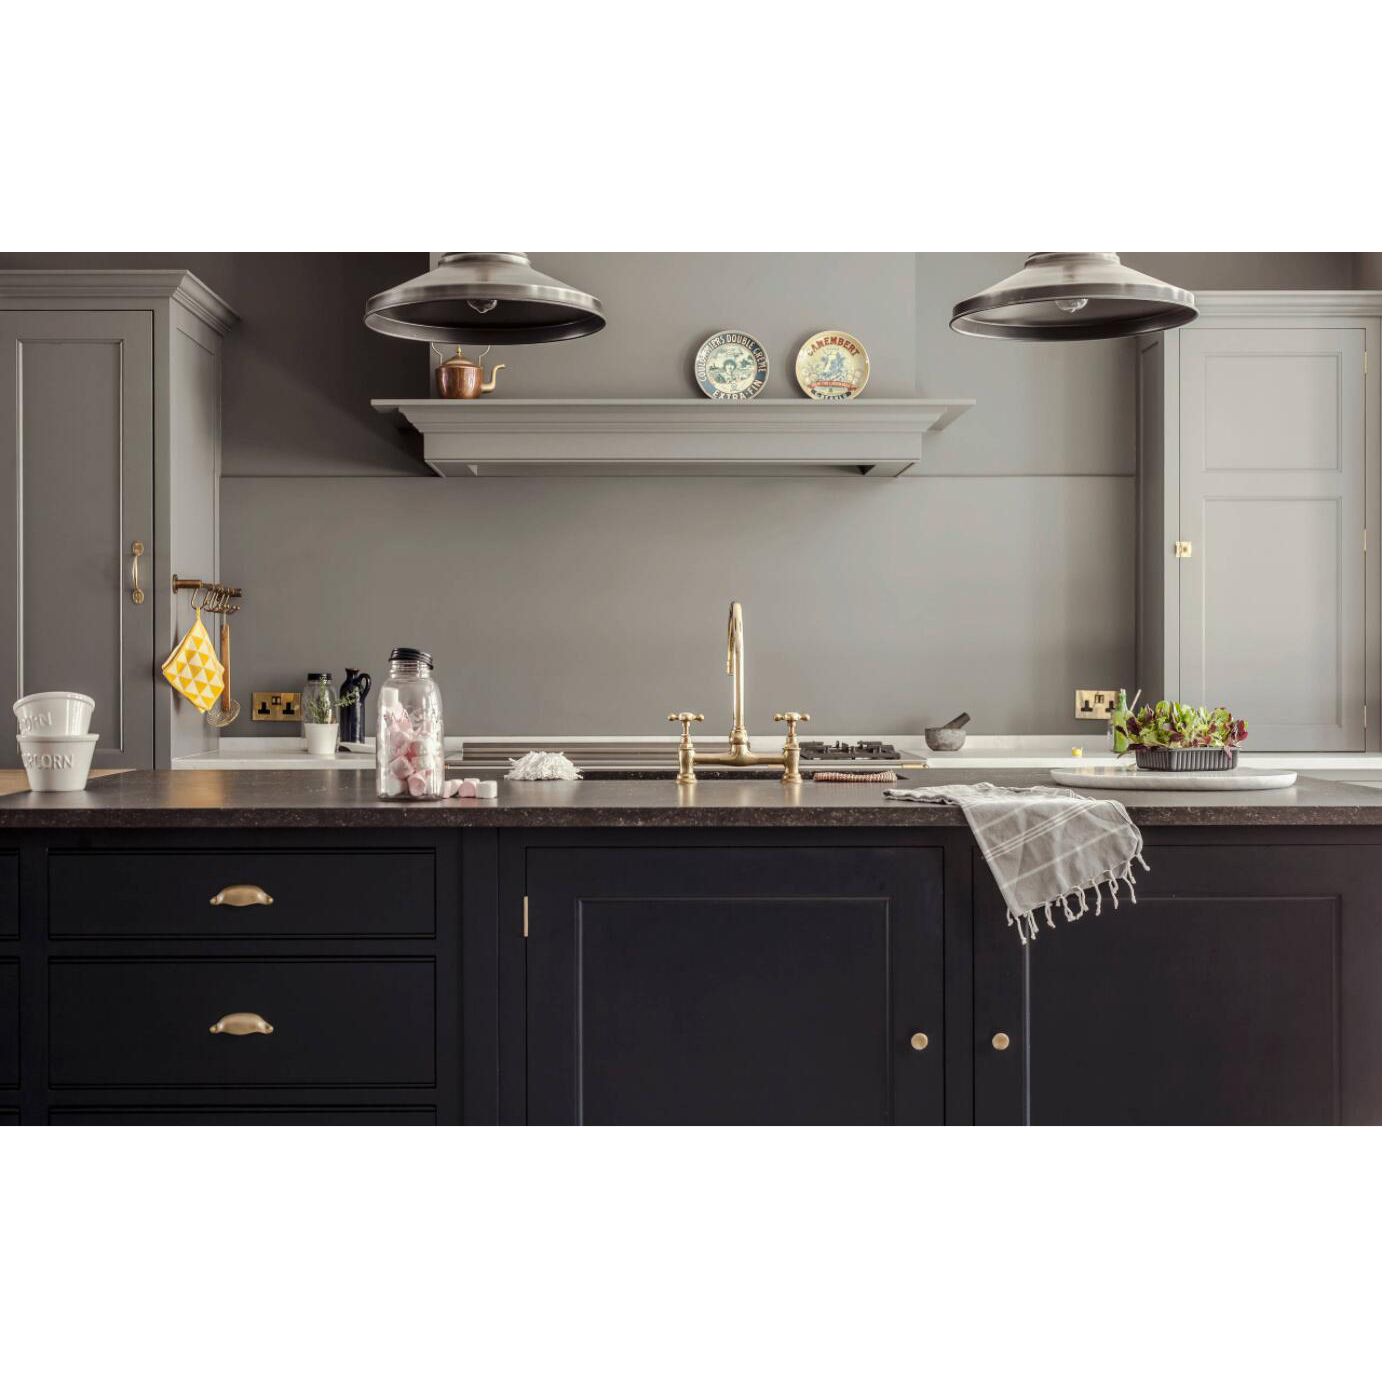 AisDecor new white wood kitchen cabinets manufacturer-2